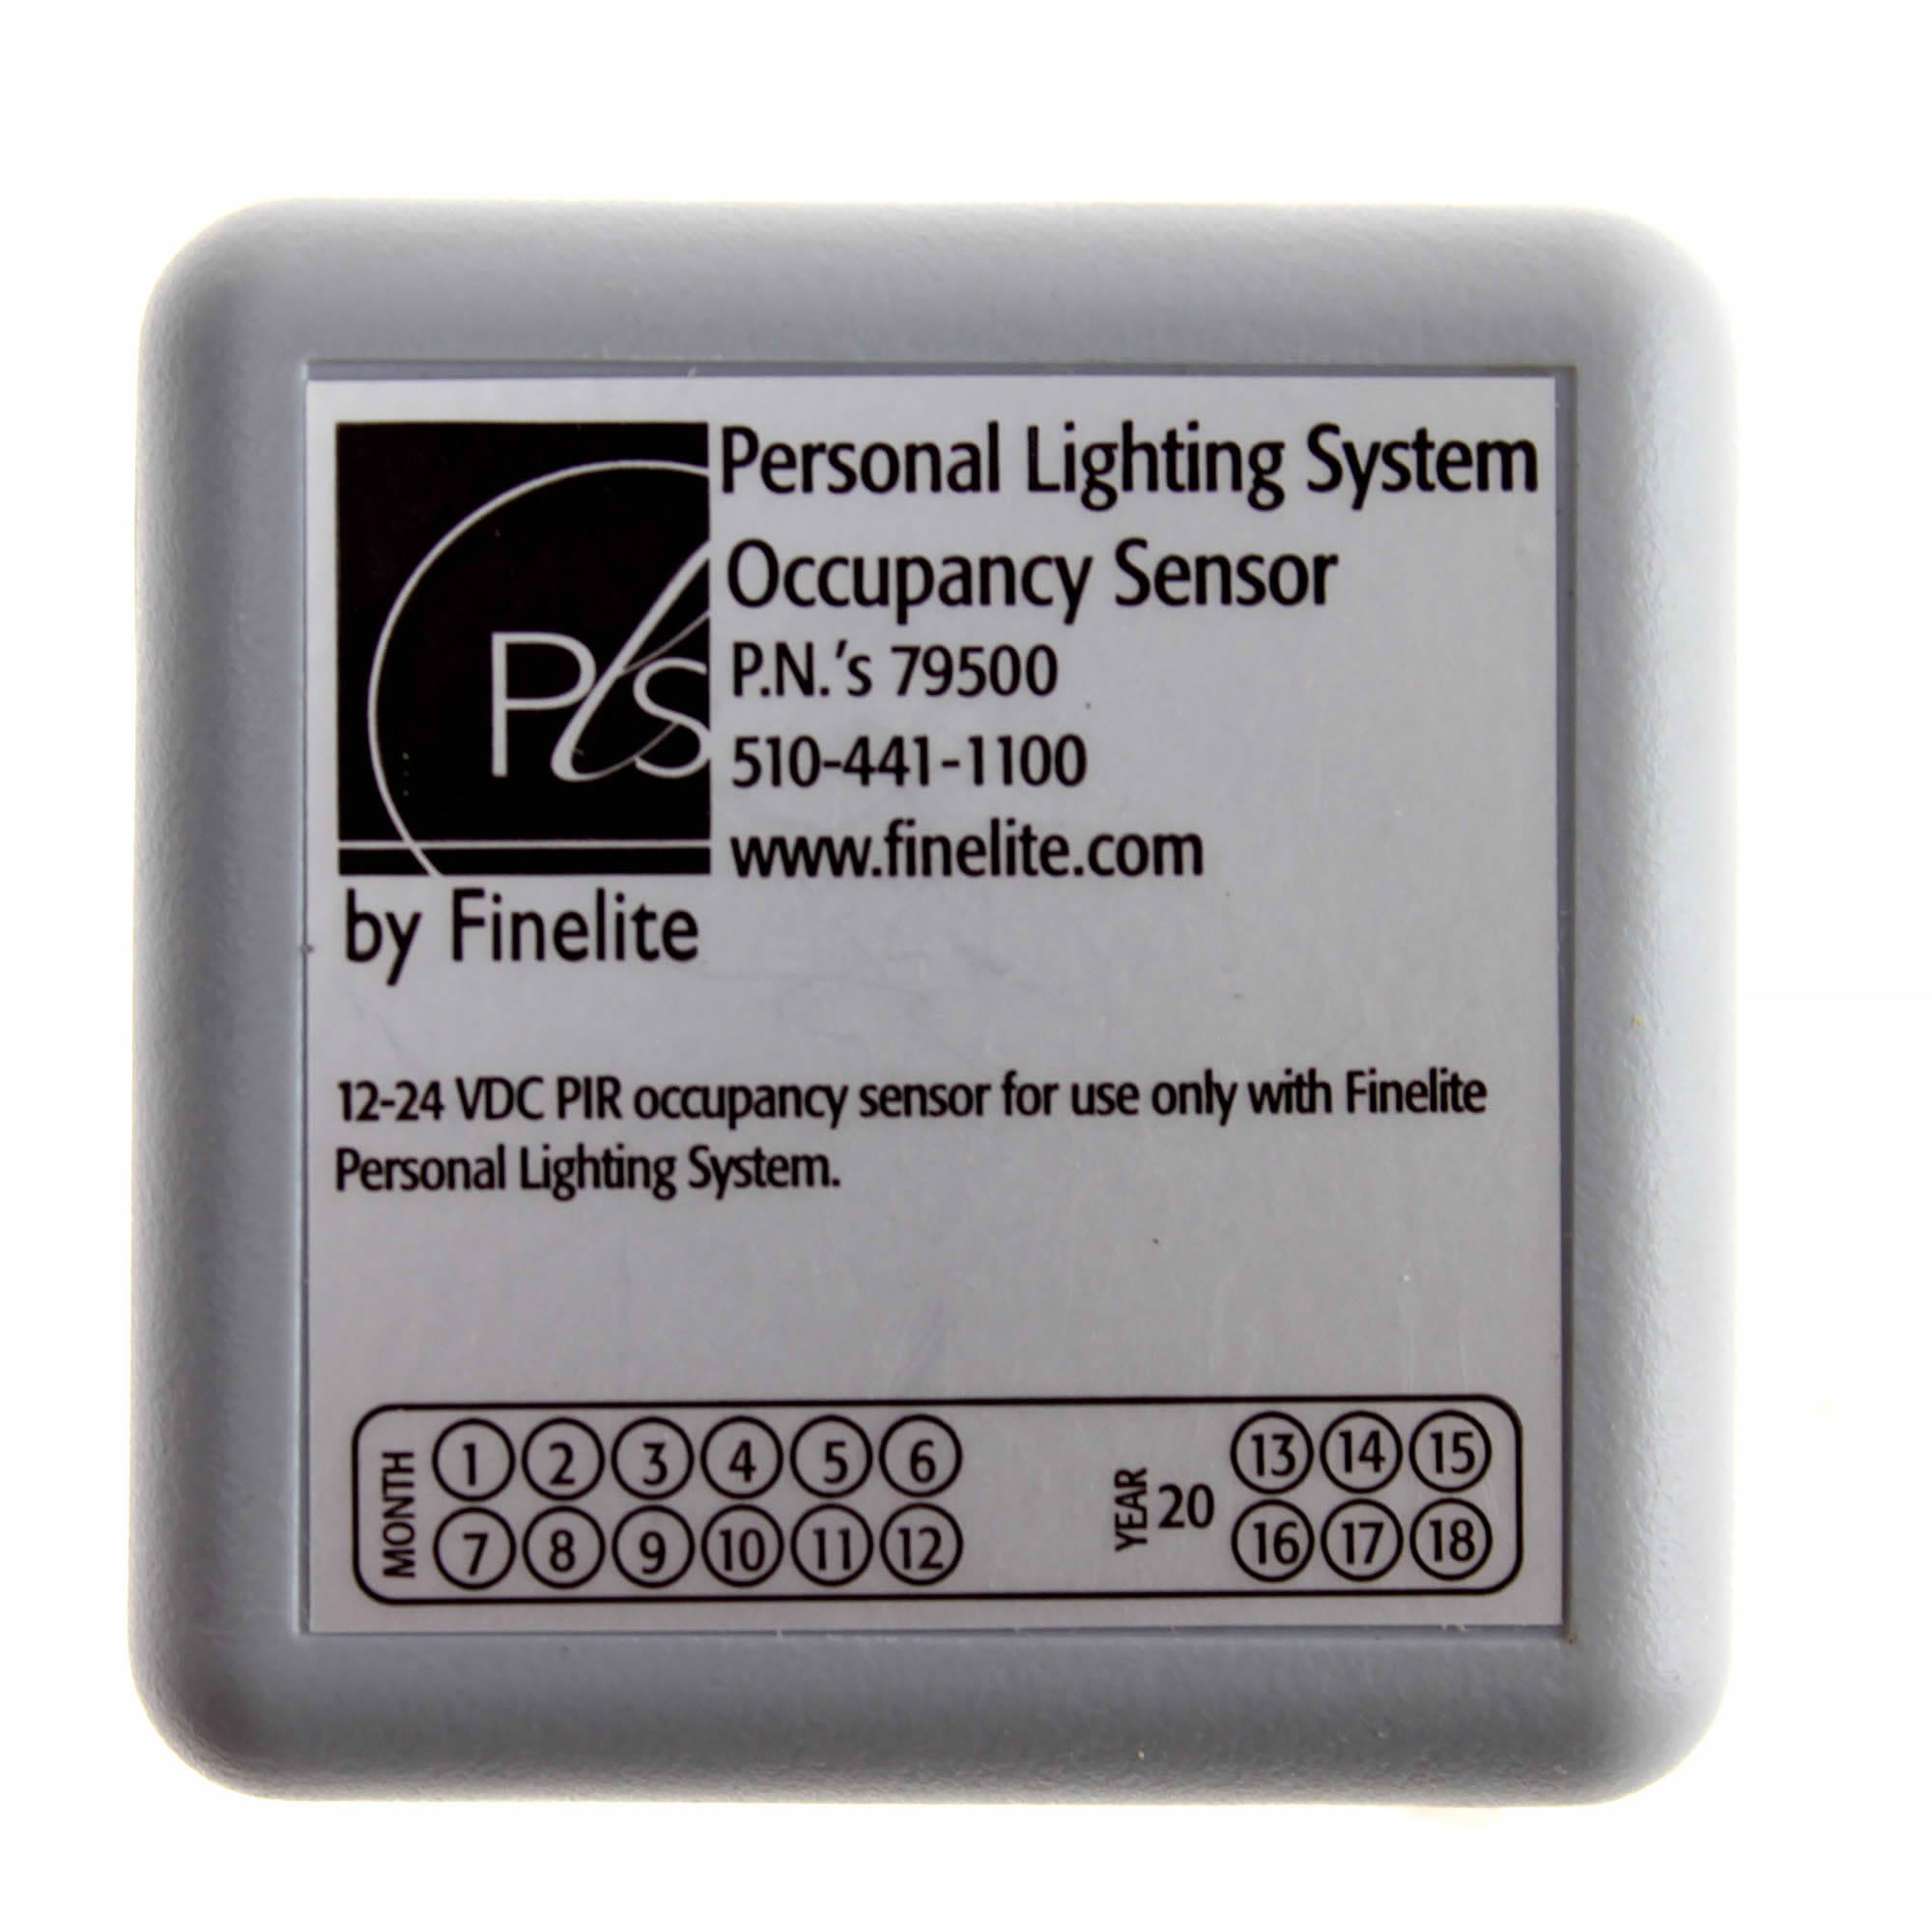 Finelite, FINELITE OCC 79500 PERSONAL LIGHTING SYSTEM OCCUPANCY SENSOR, 12-24 VDC, PIR